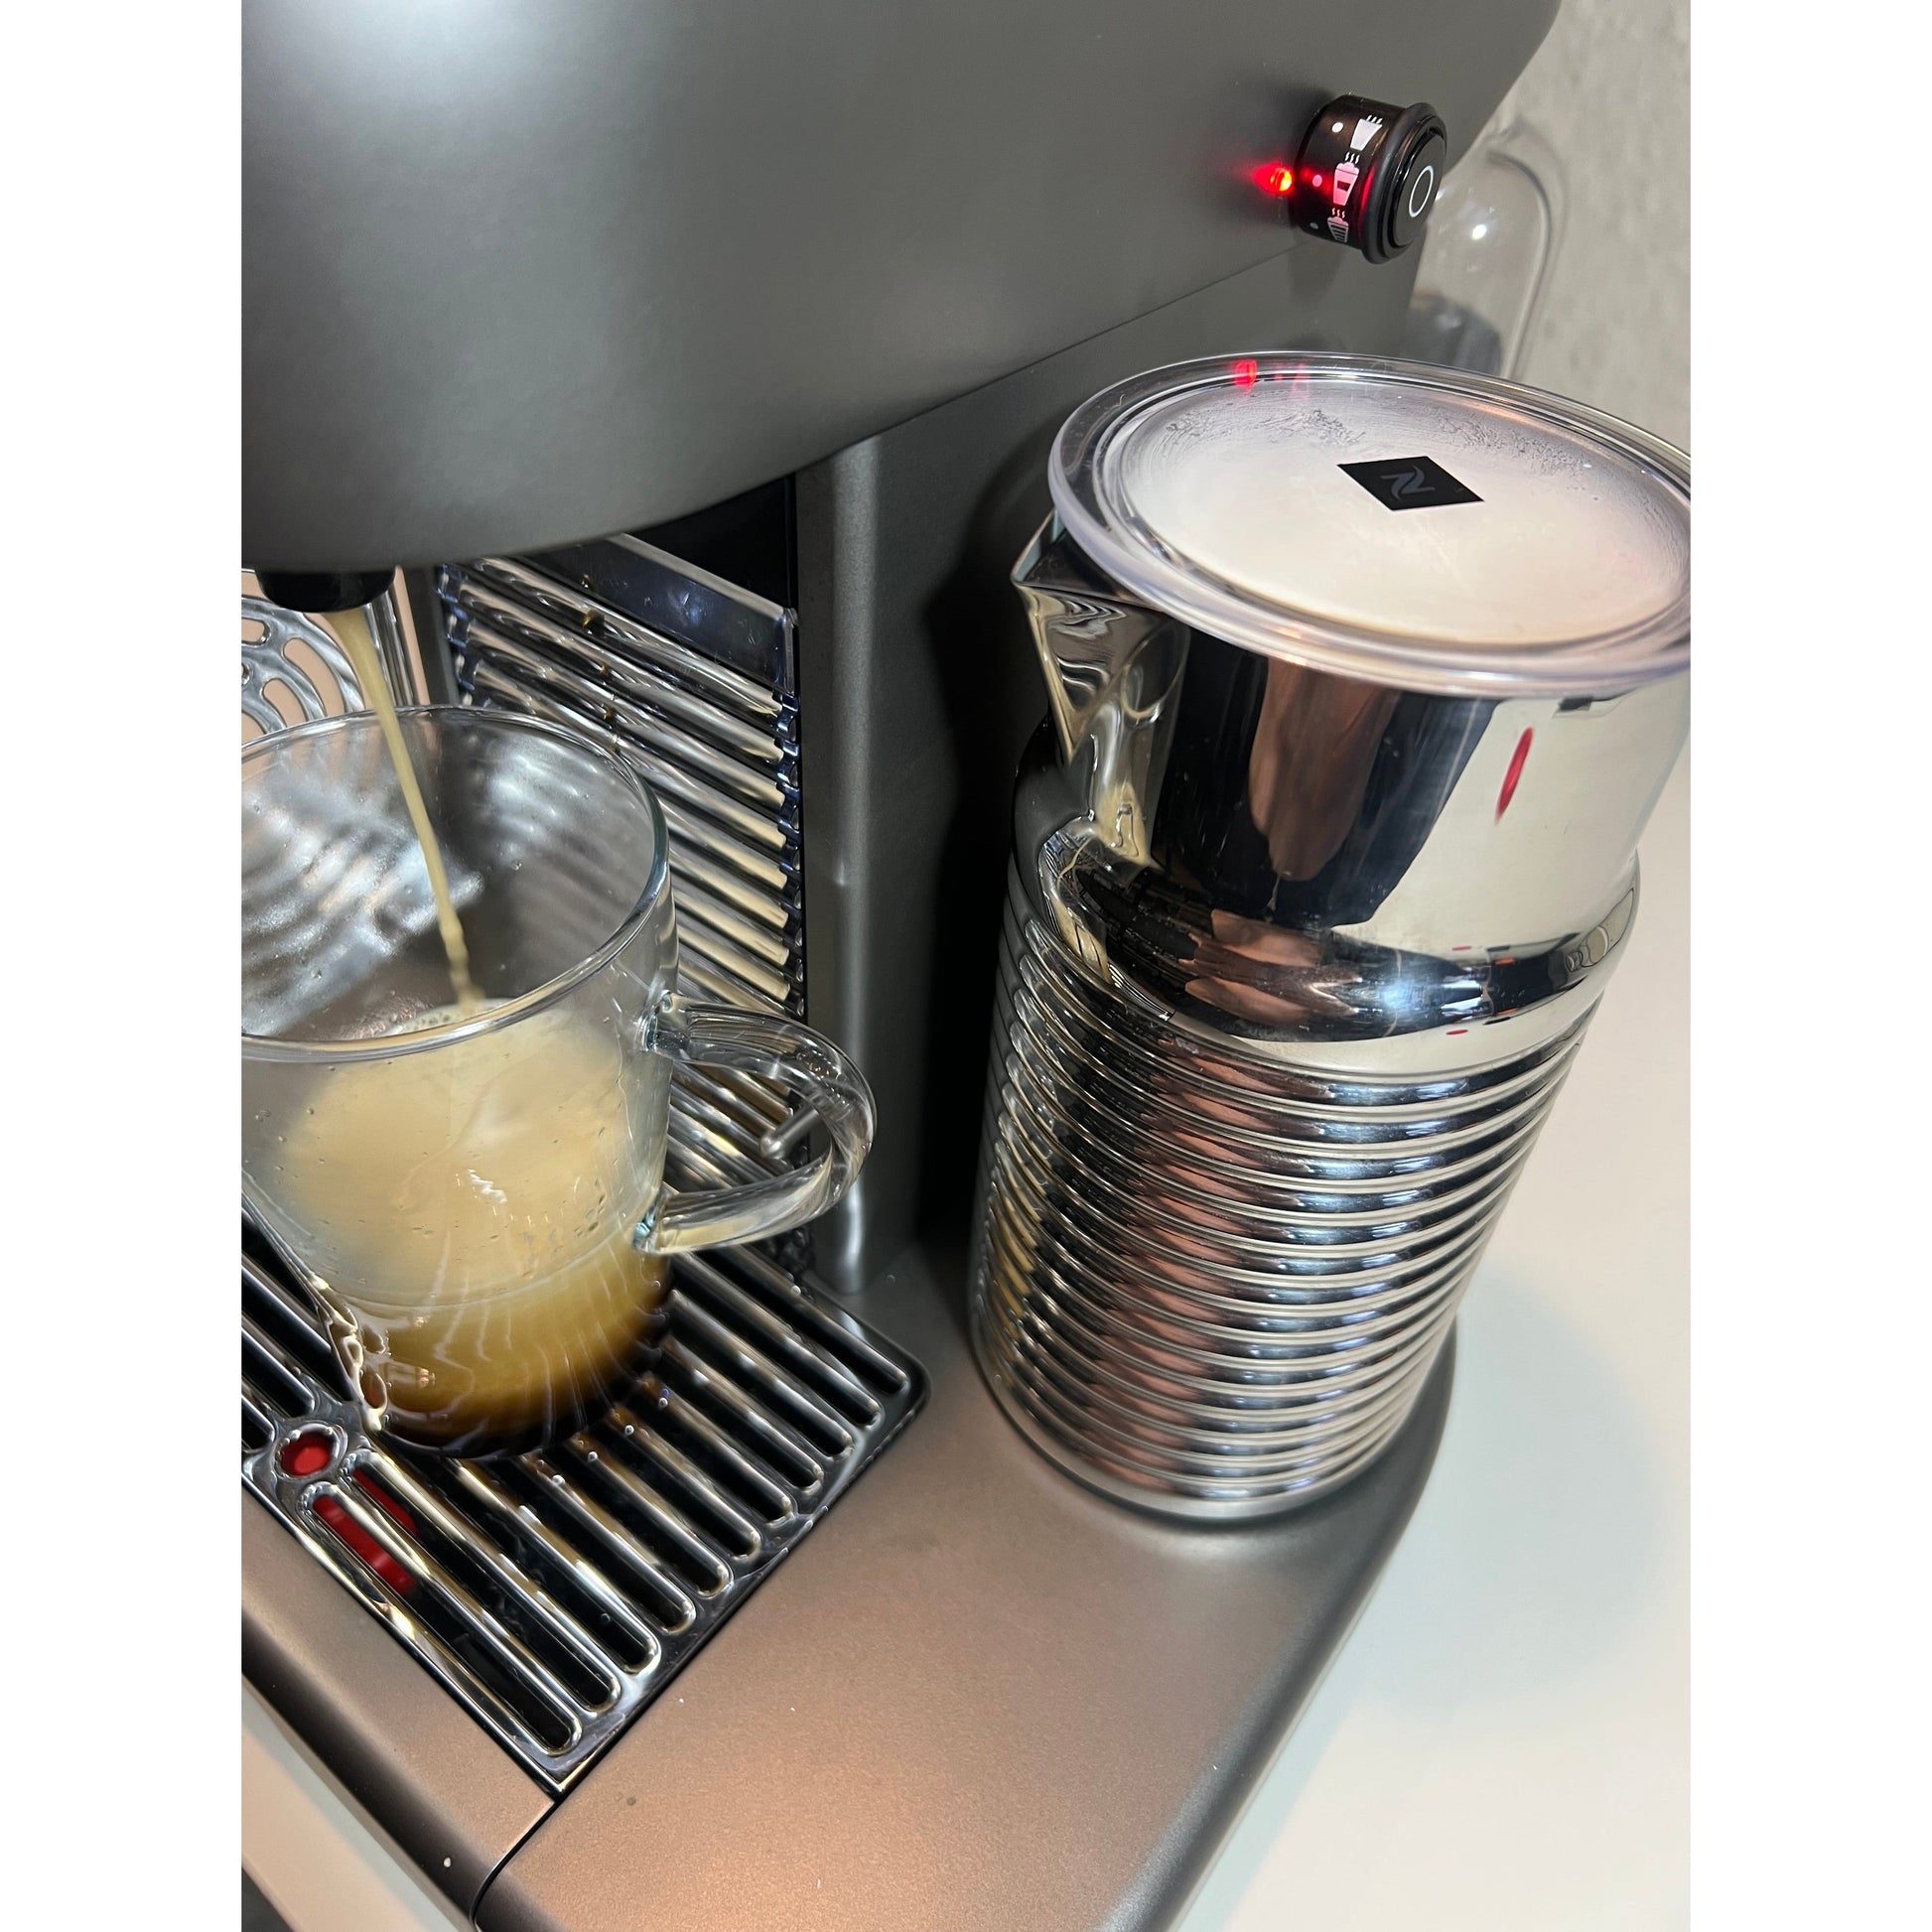 Nespresso Gran Maestria - Demo Model - Like New